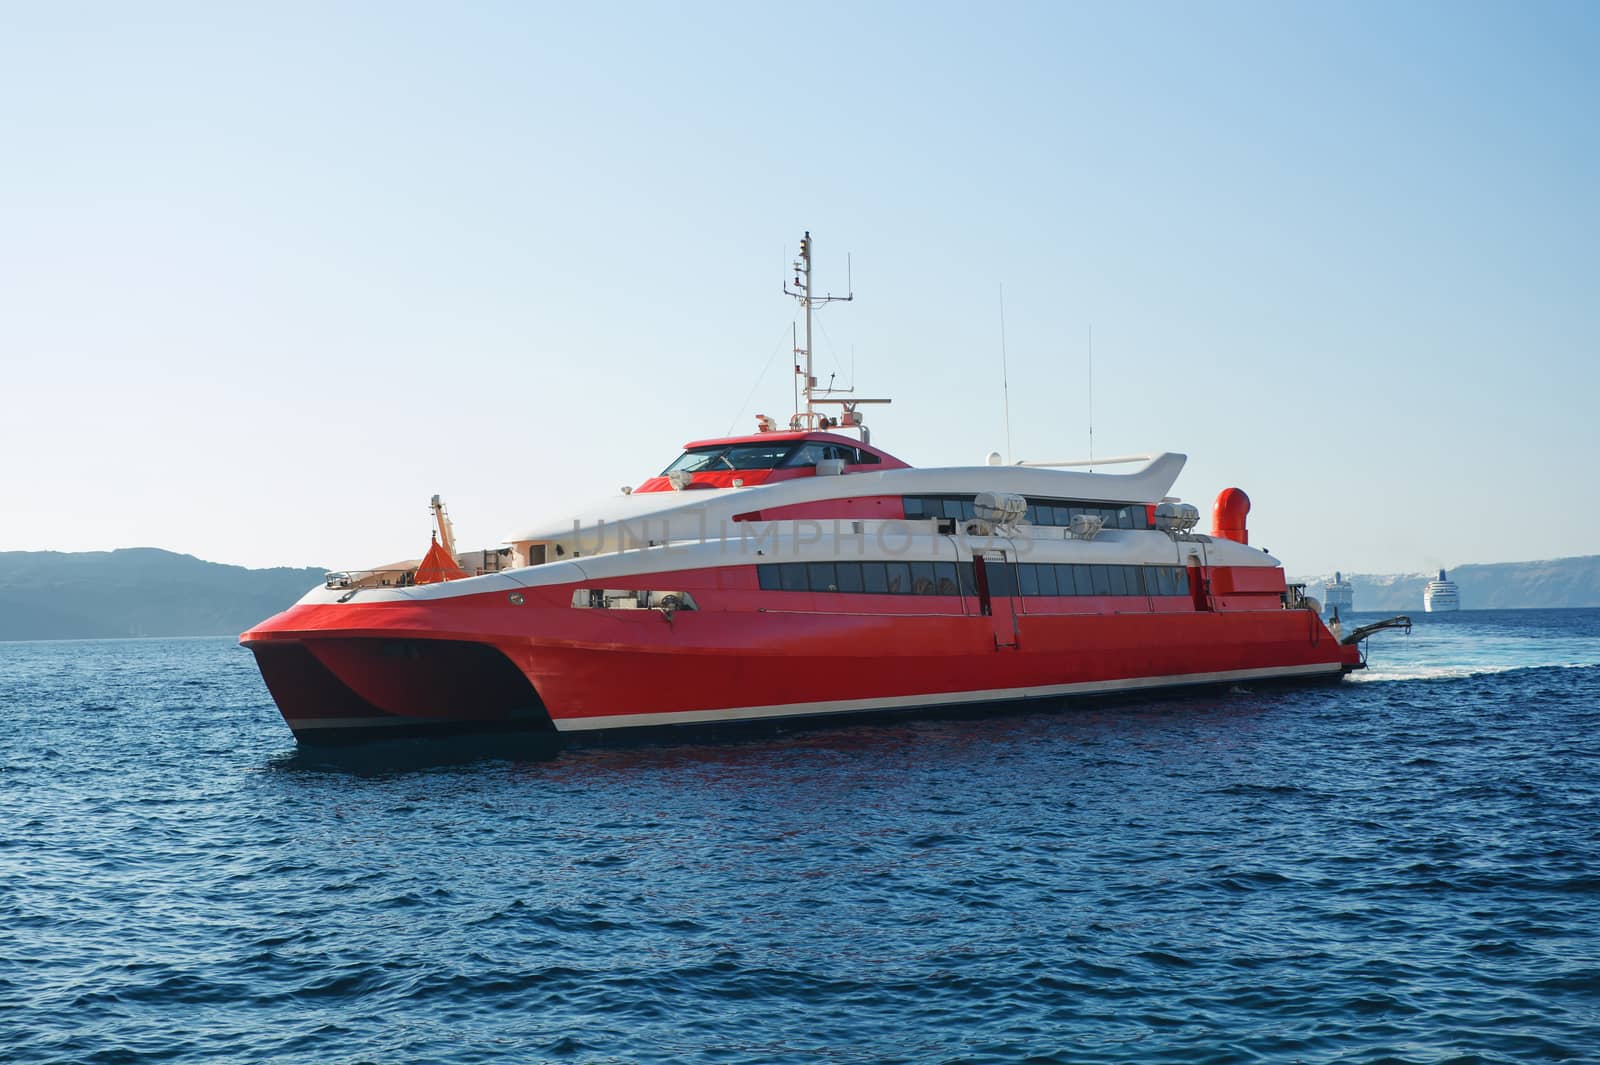 Speed red ferry boat on Santorini, Greece